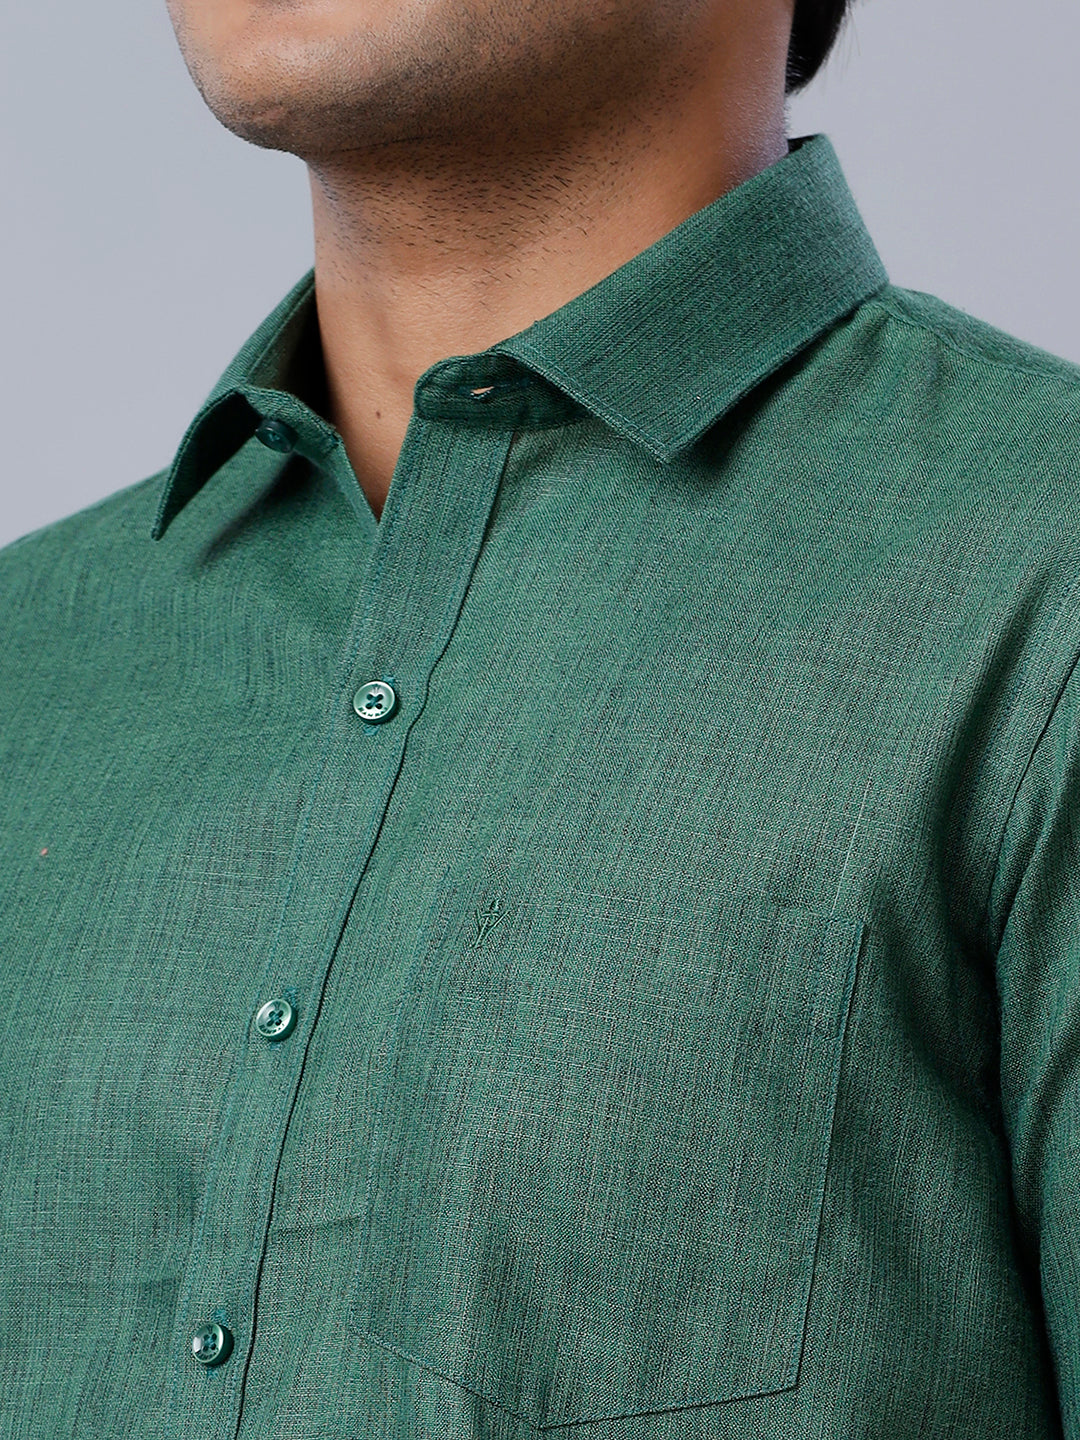 Mens Formal Shirt Half Sleeves Dark Green T26 TB9-Zoom view